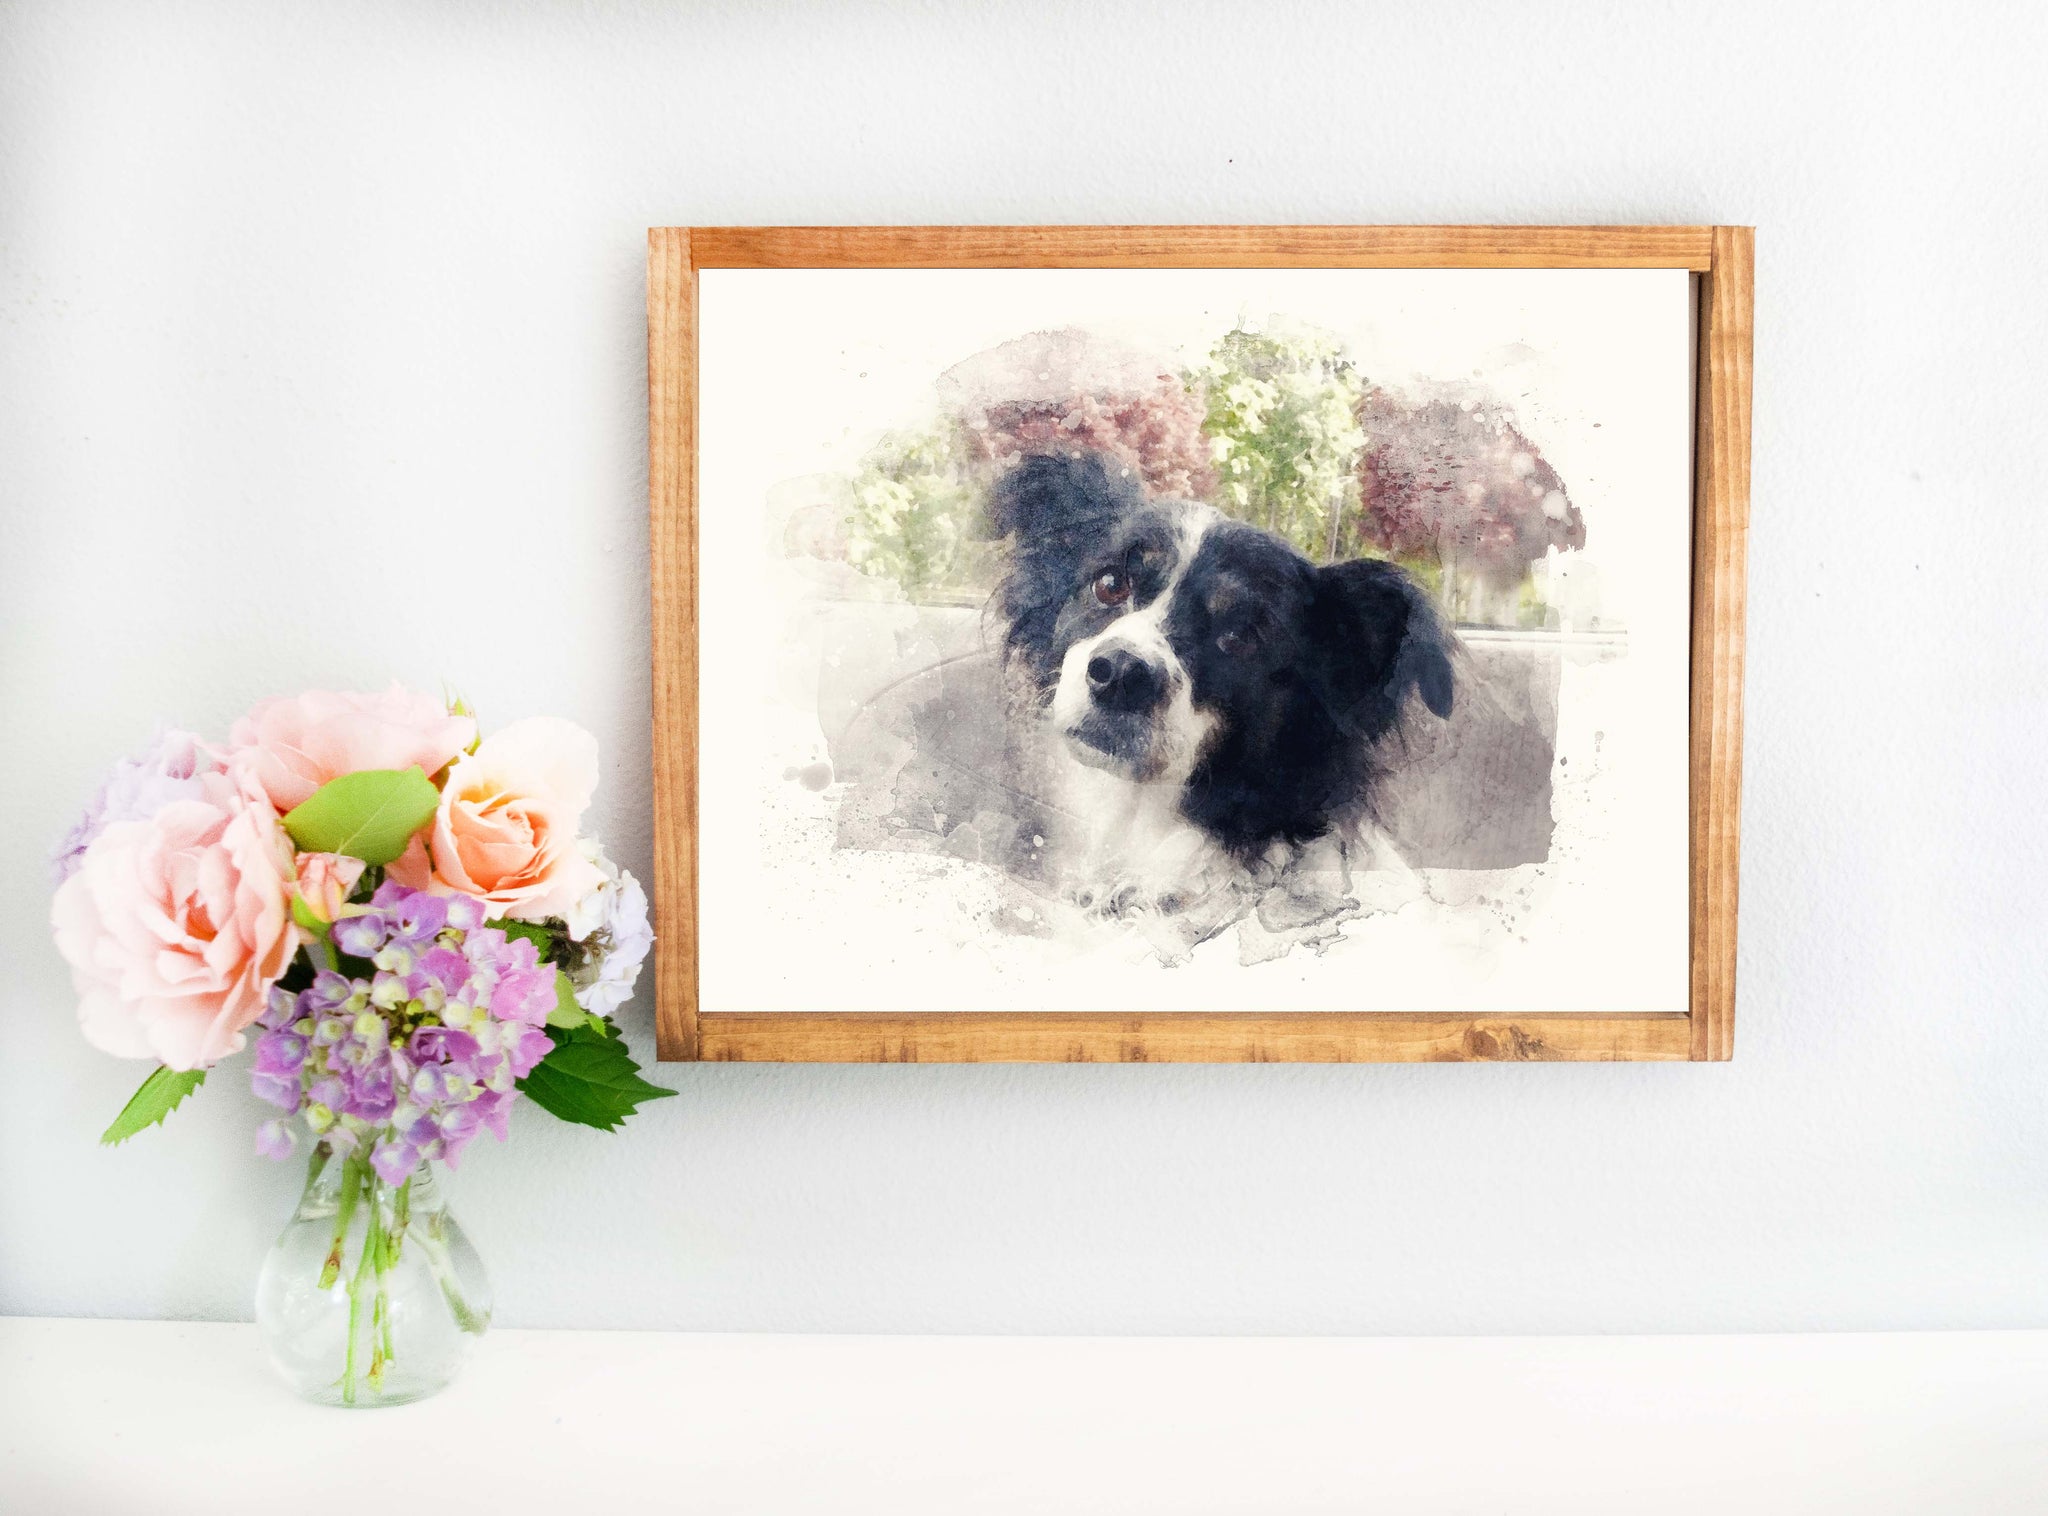 Pet Projects : Paint a Dog Portrait in Watercolor